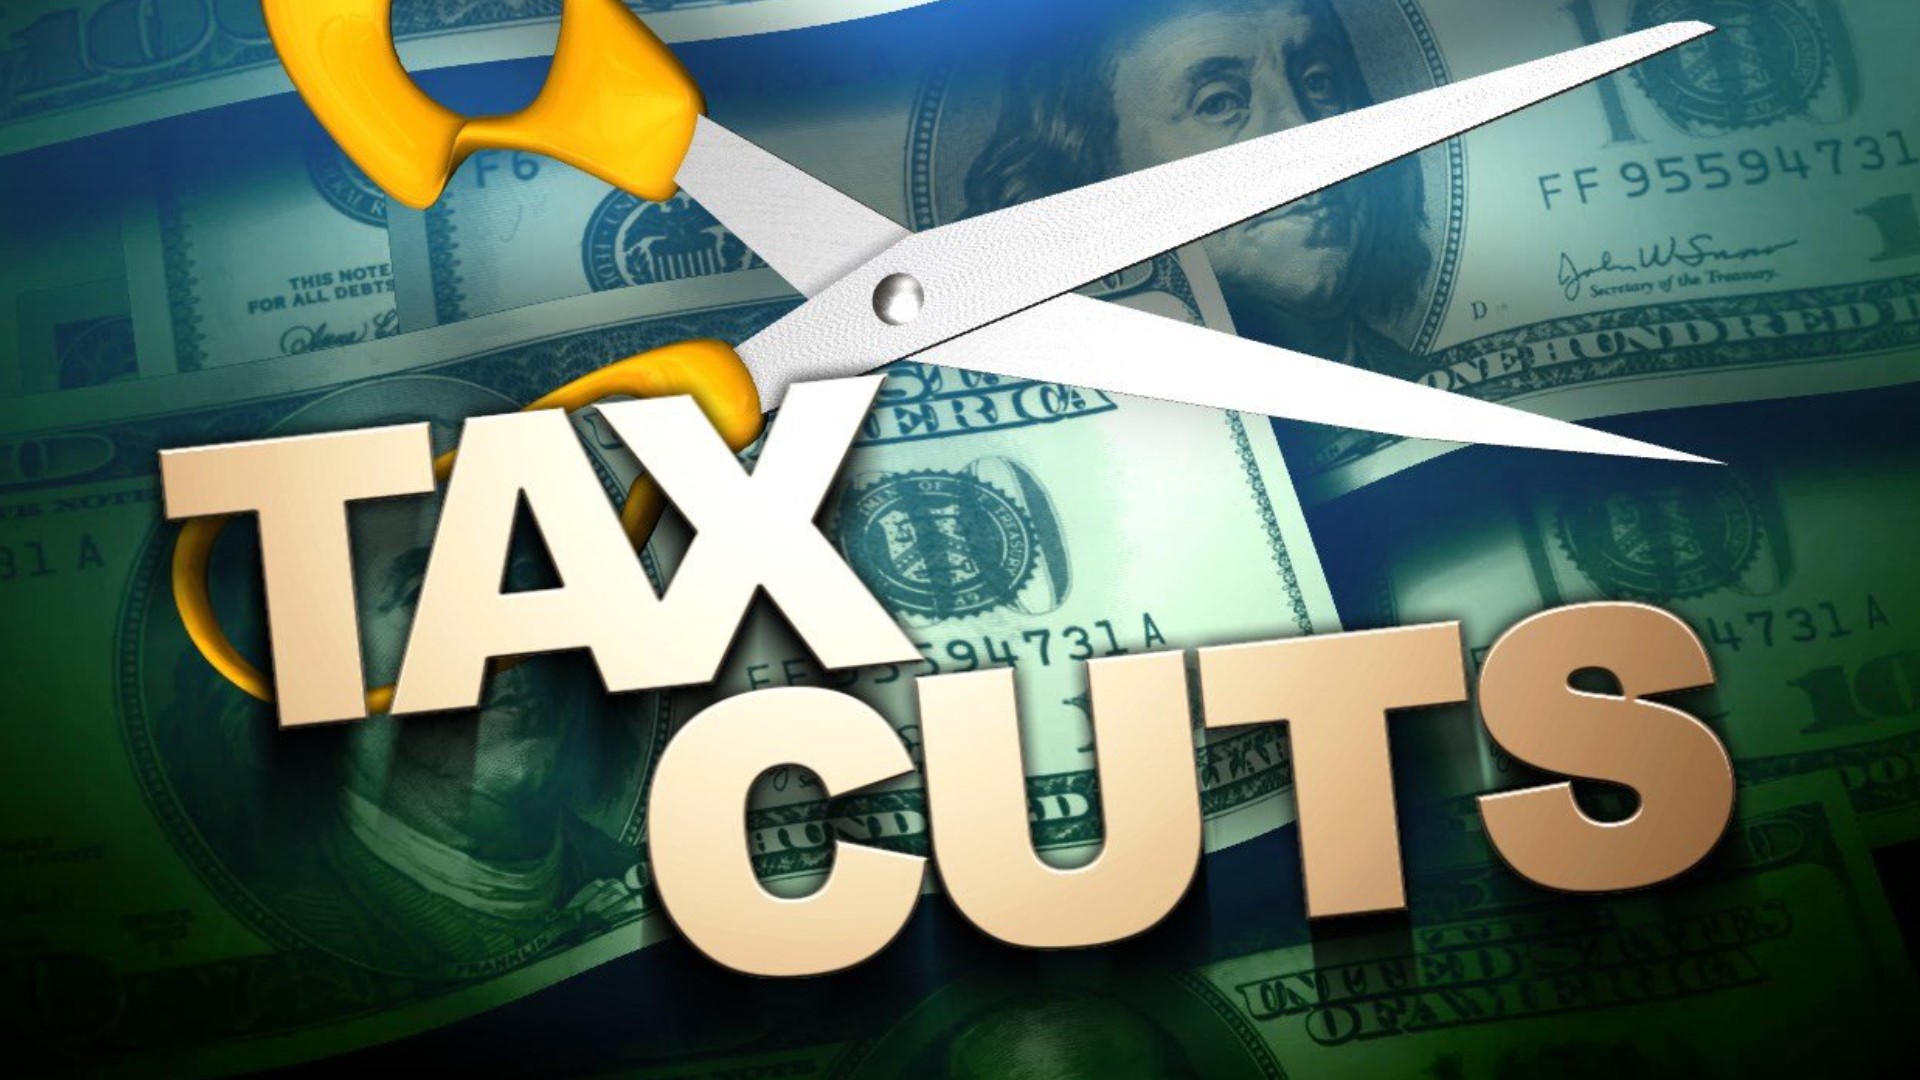 Arkansas governor Asa Hutchinson signed legislation cutting tax rates for Arkansans.